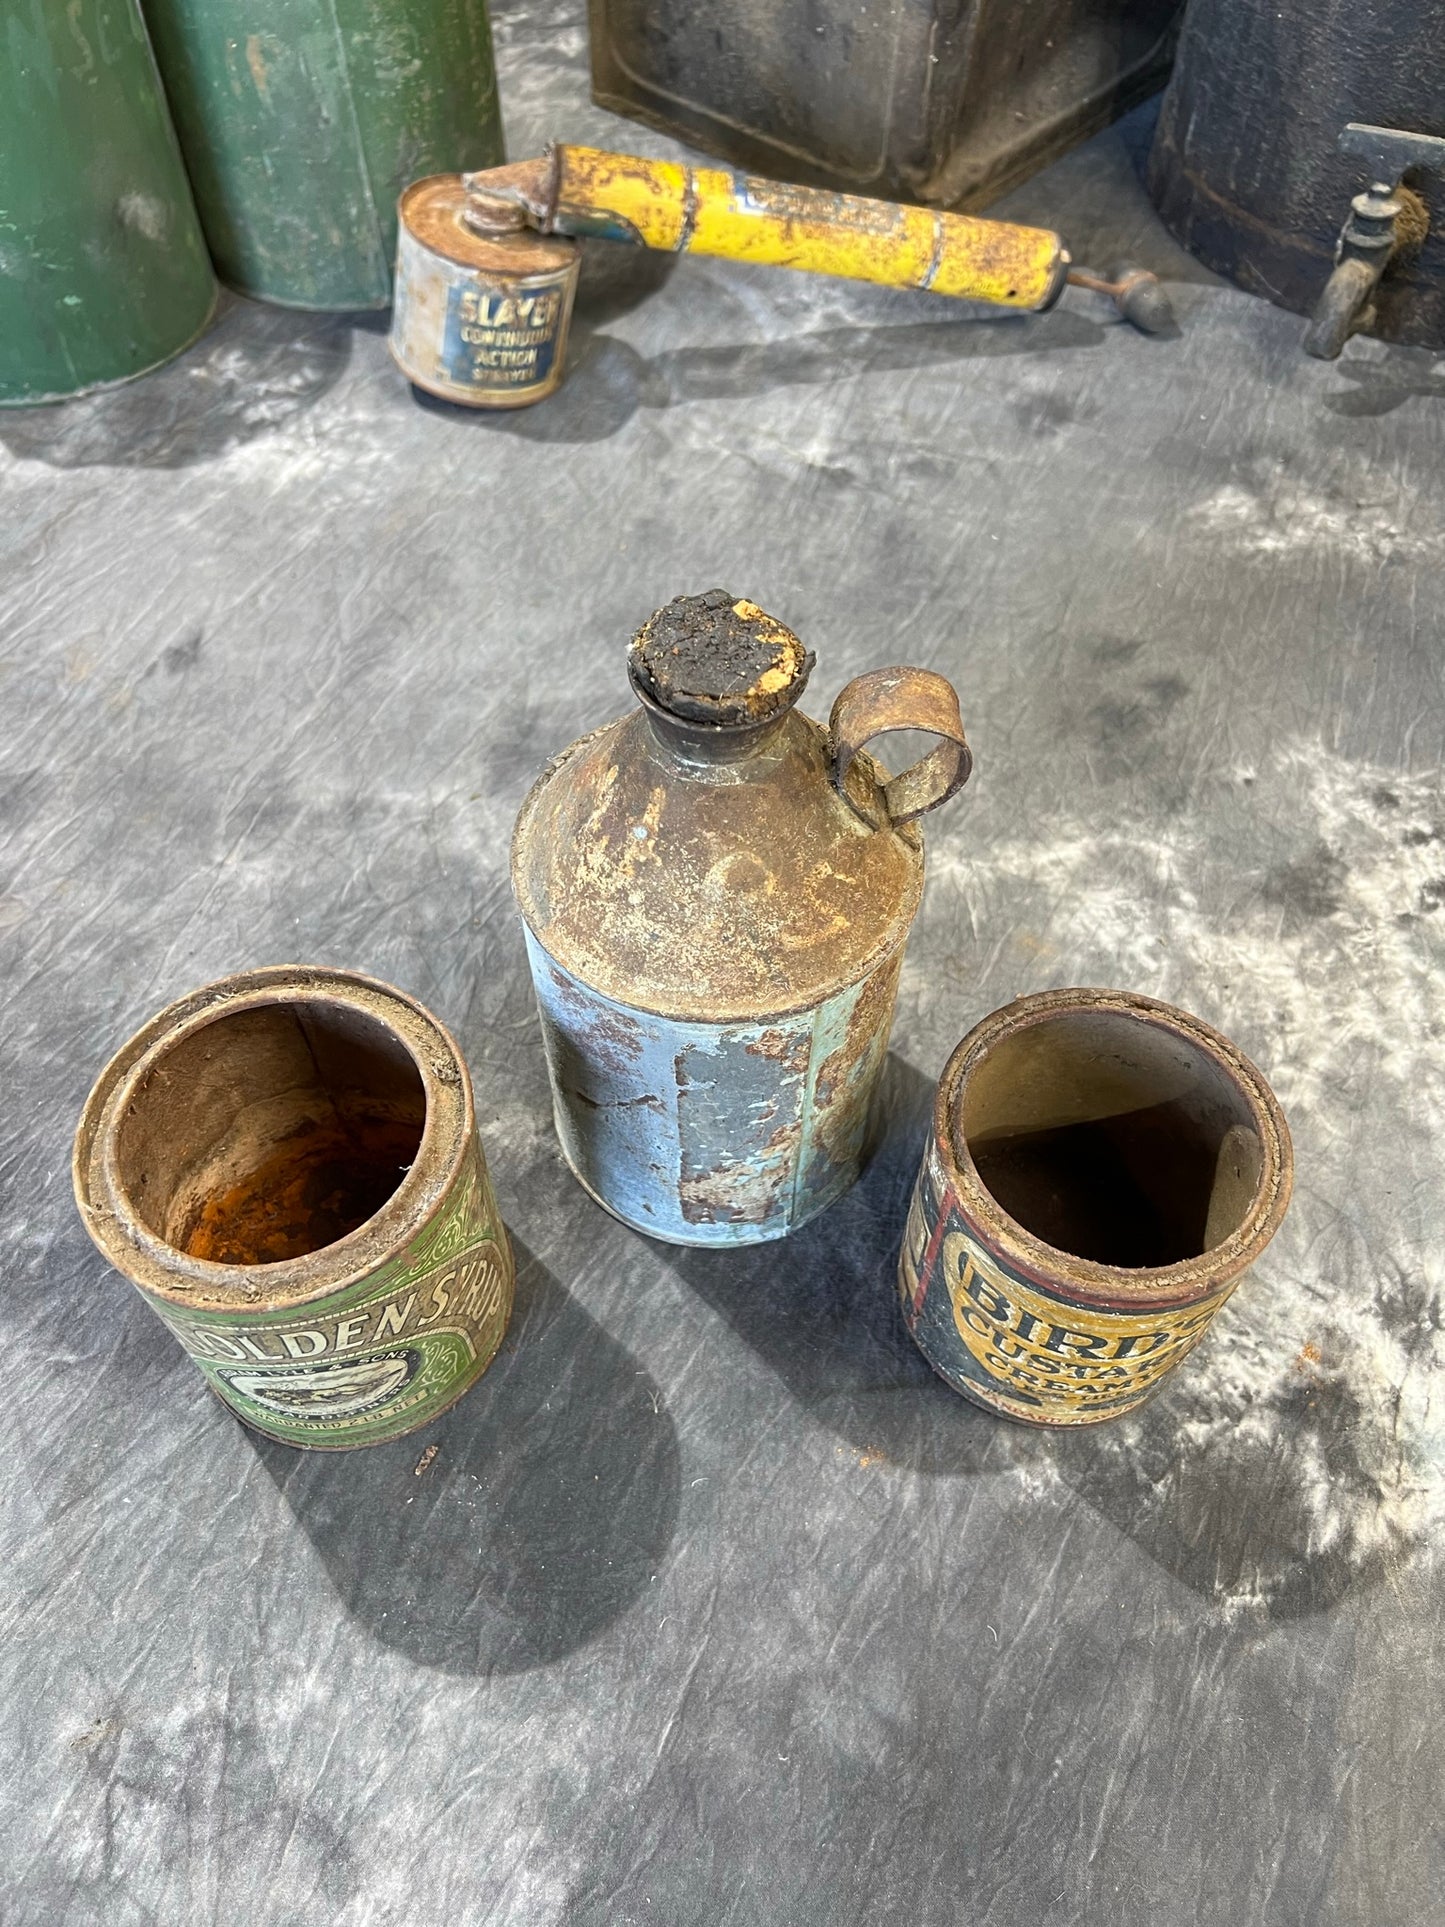 3x Vintage Metal Tin Cans Birds Custard Lyles Syrup Old Advertising Rustic Decor Display